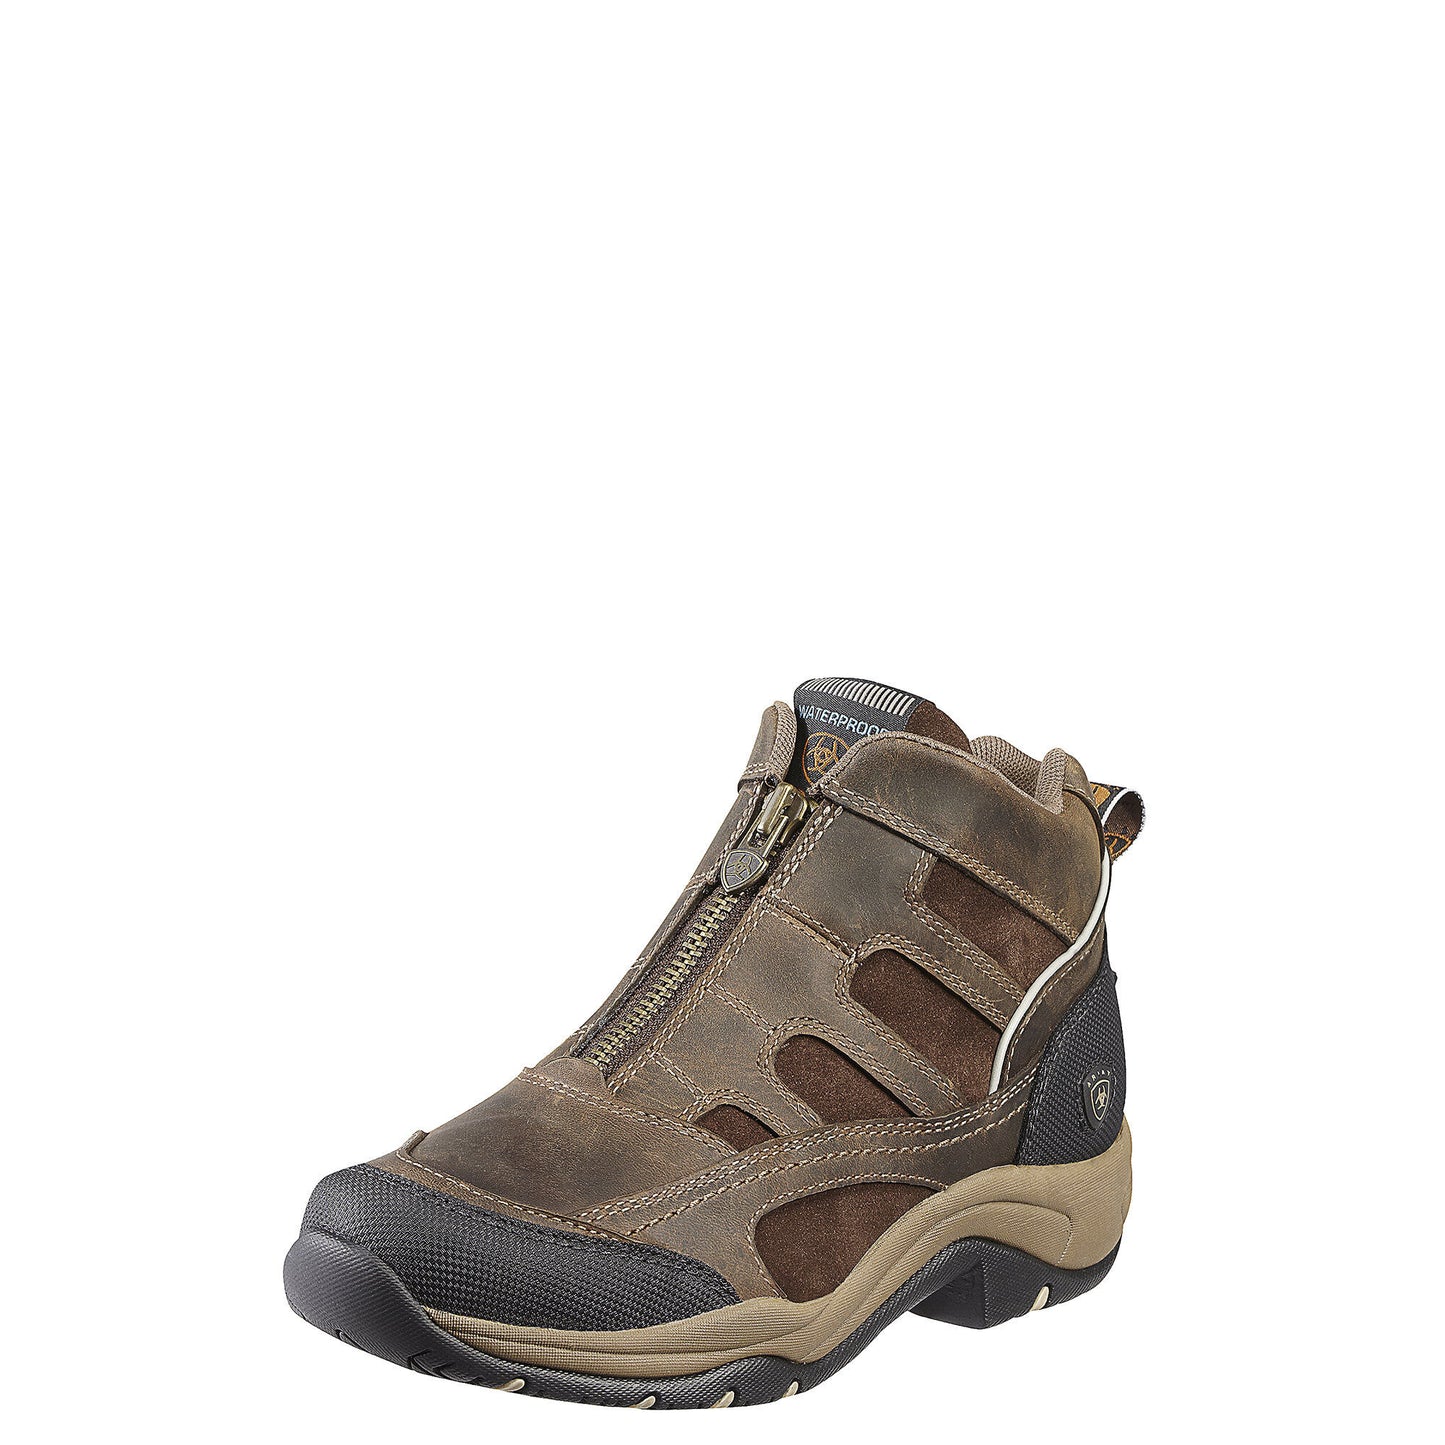 Ariat Women's Terrain Zip H2O Hiking Boot - Distressed Brown